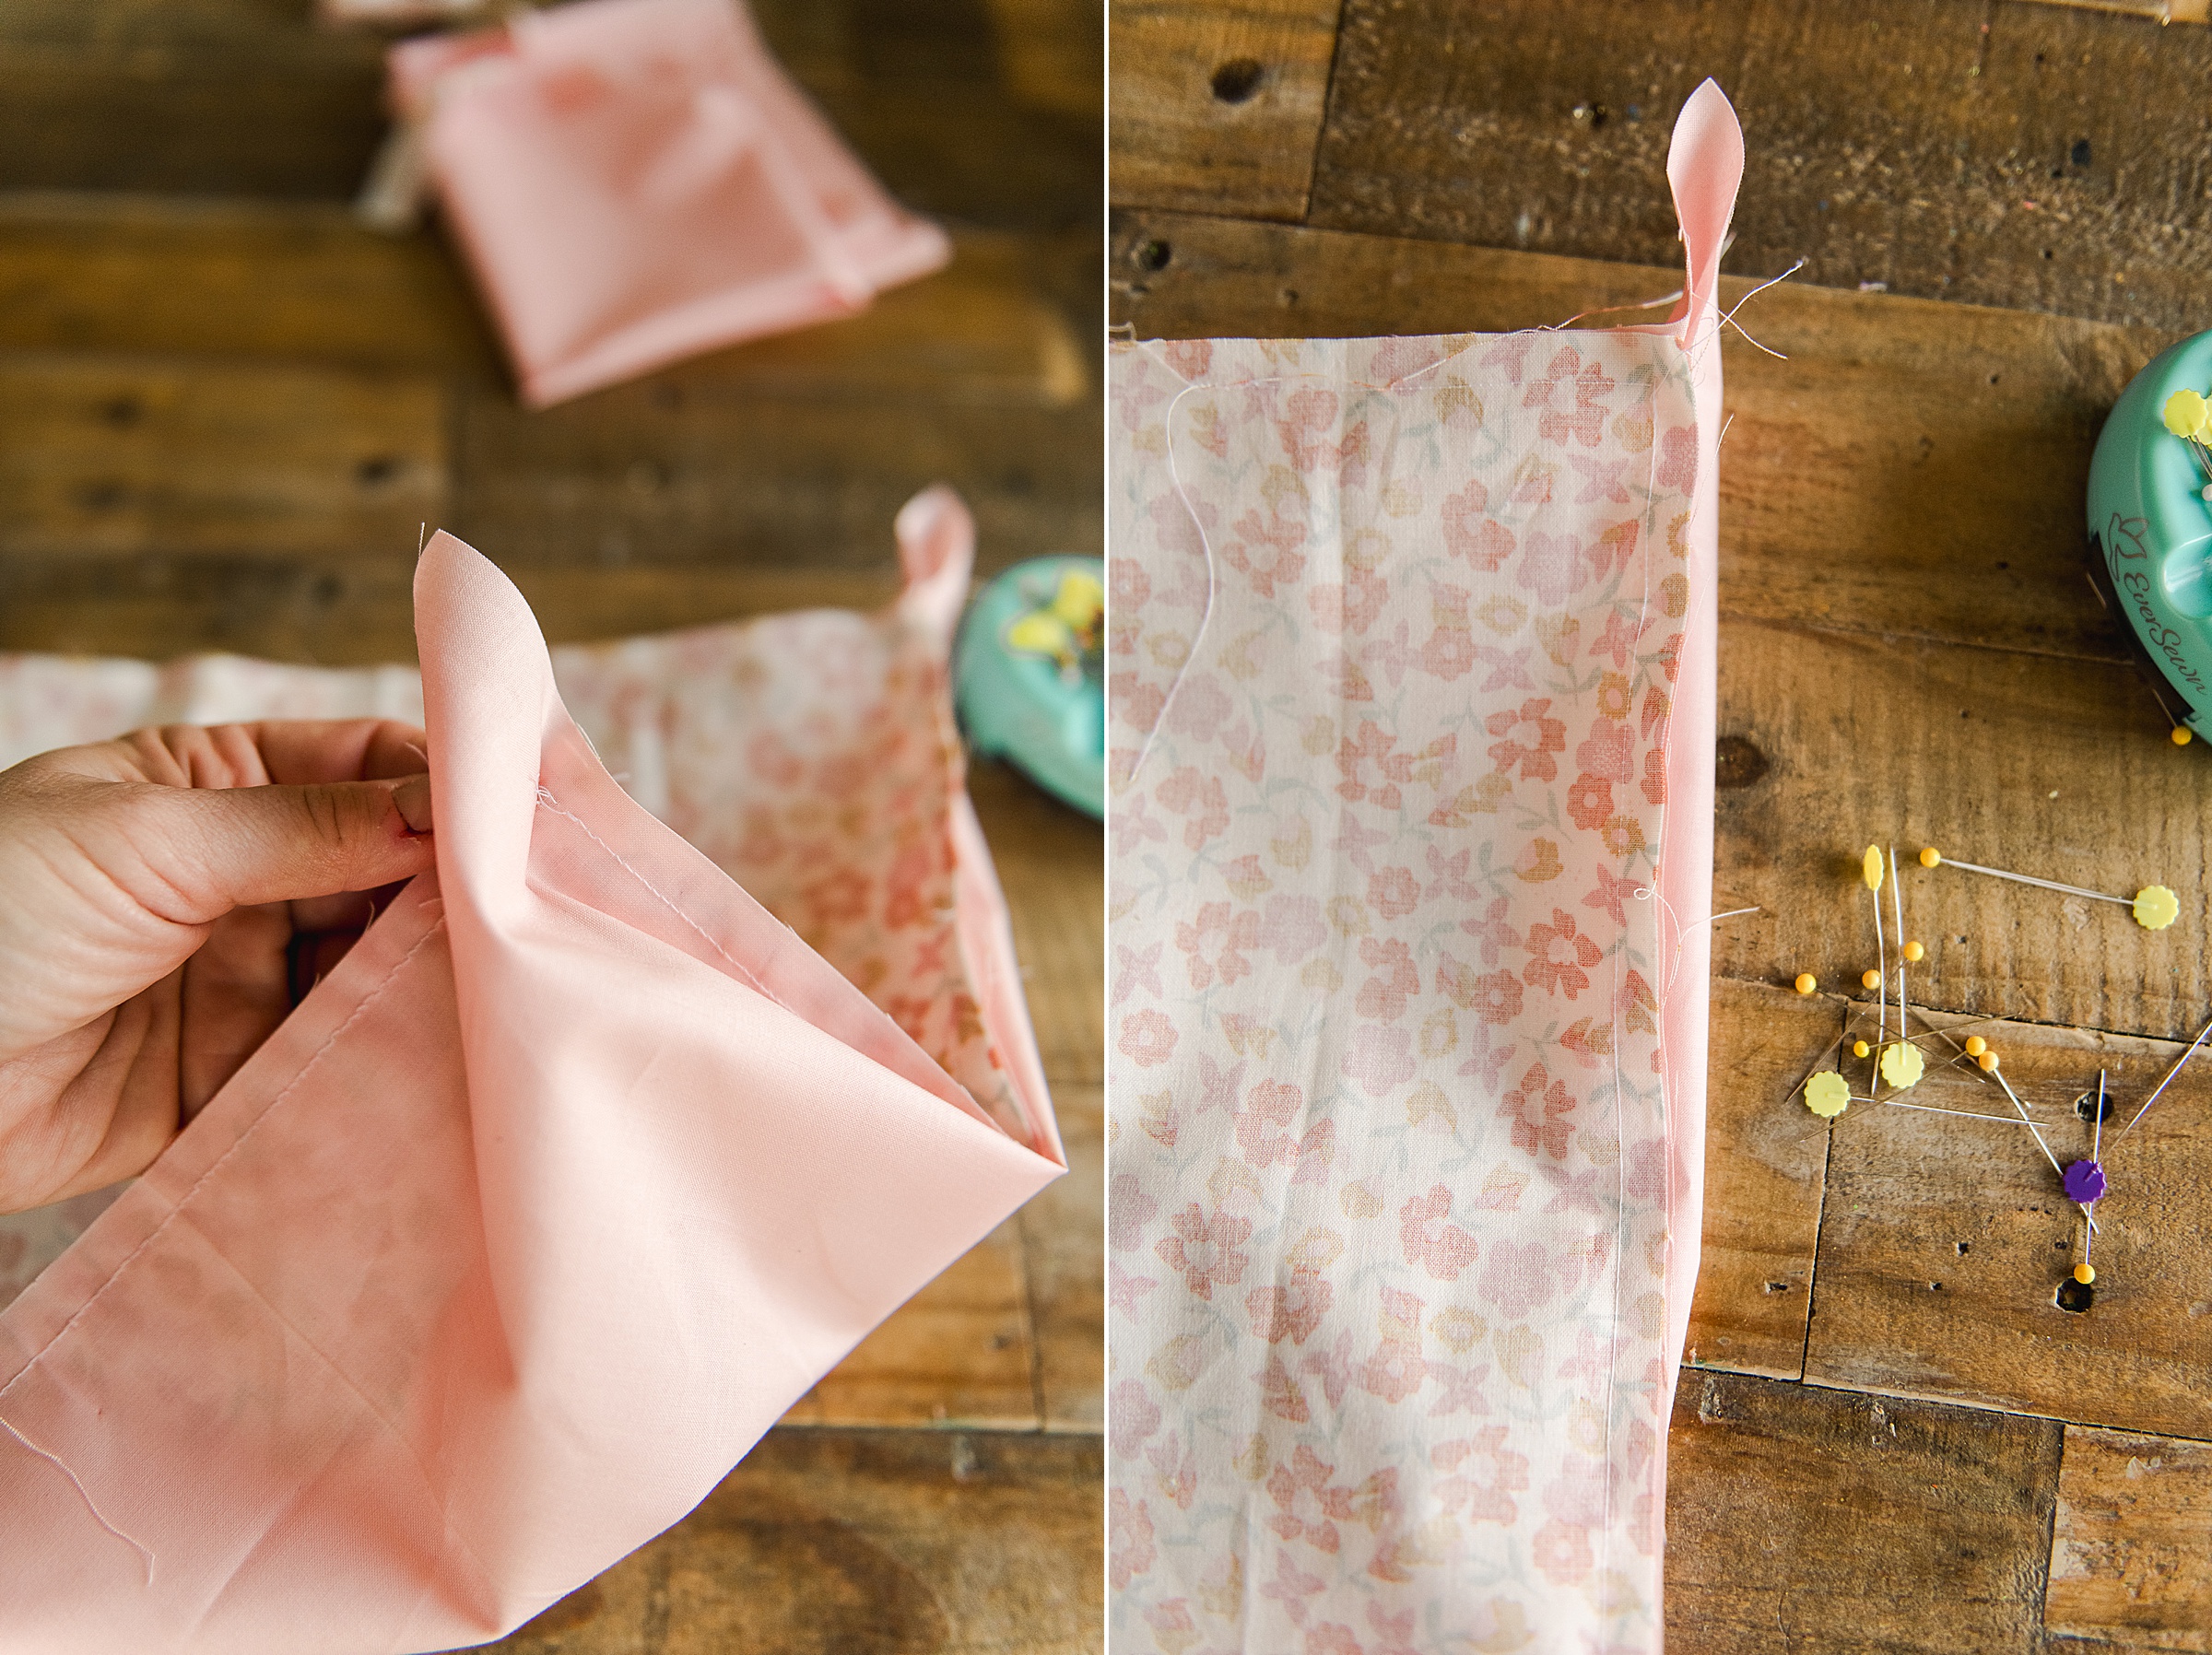 Easy binding napkin tutorial, fabric napkin tutorial, free fabric napkin pattern, how to bind easily fabric napkin pattern, easy binding napkins